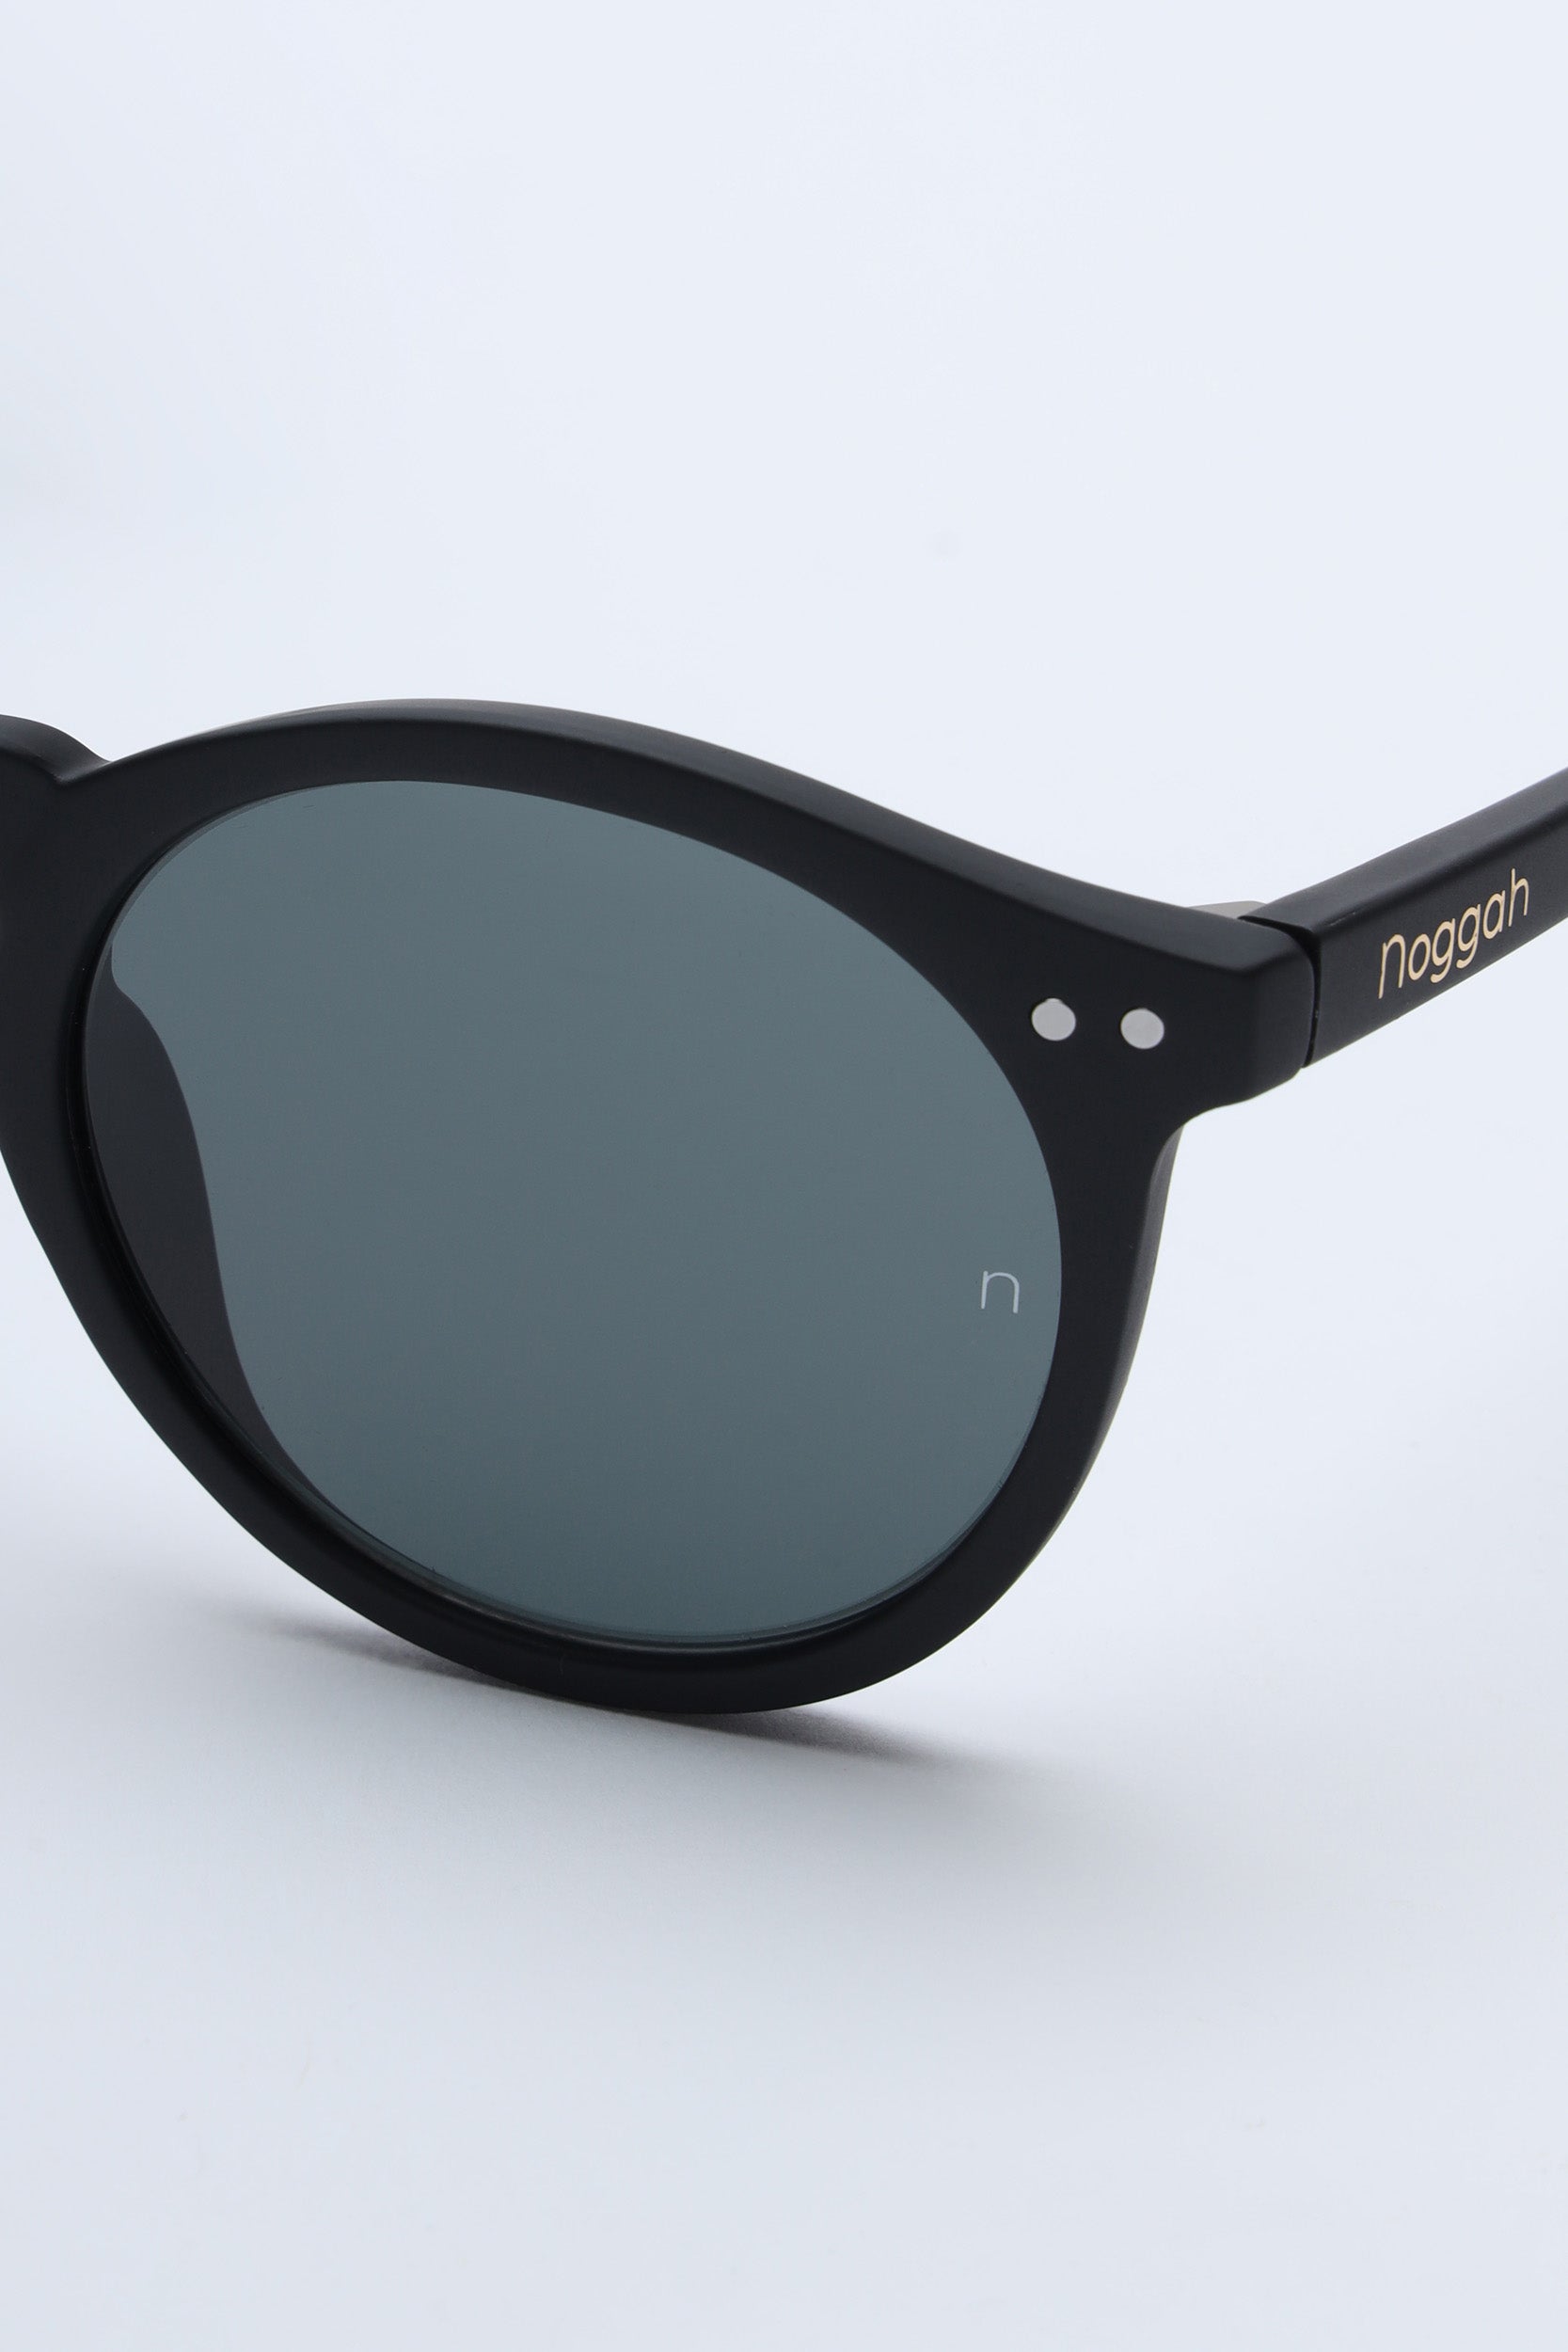 NS1001BFBL PC Black Frame with Black Glass Lens Sunglasses